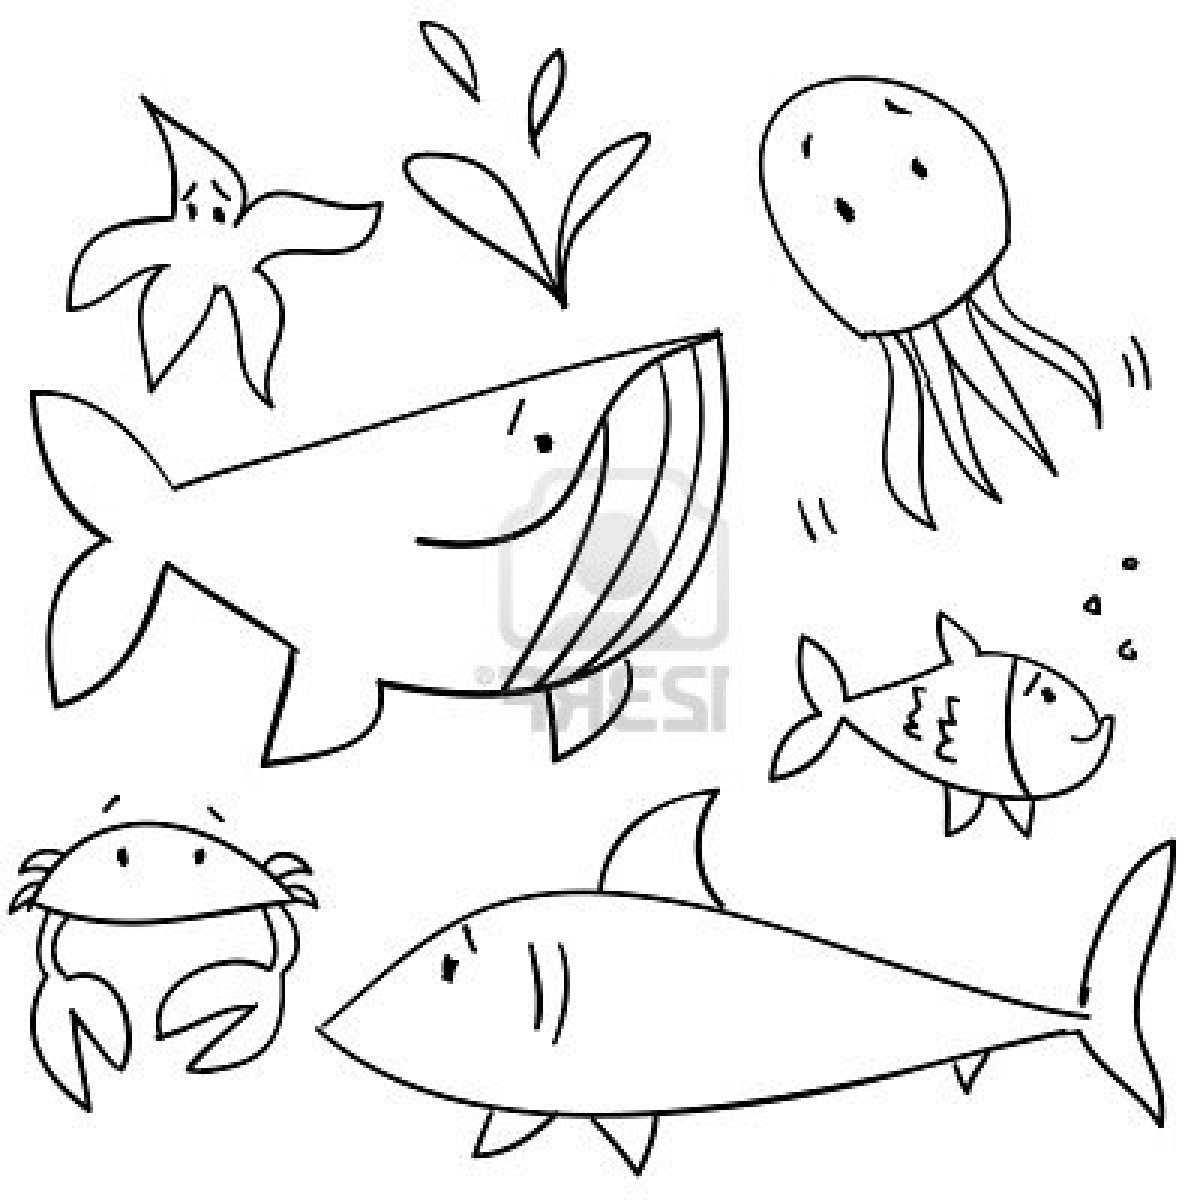 Sea Creatures Drawing at GetDrawings.com | Free for personal use Sea Creatures Drawing of your ...